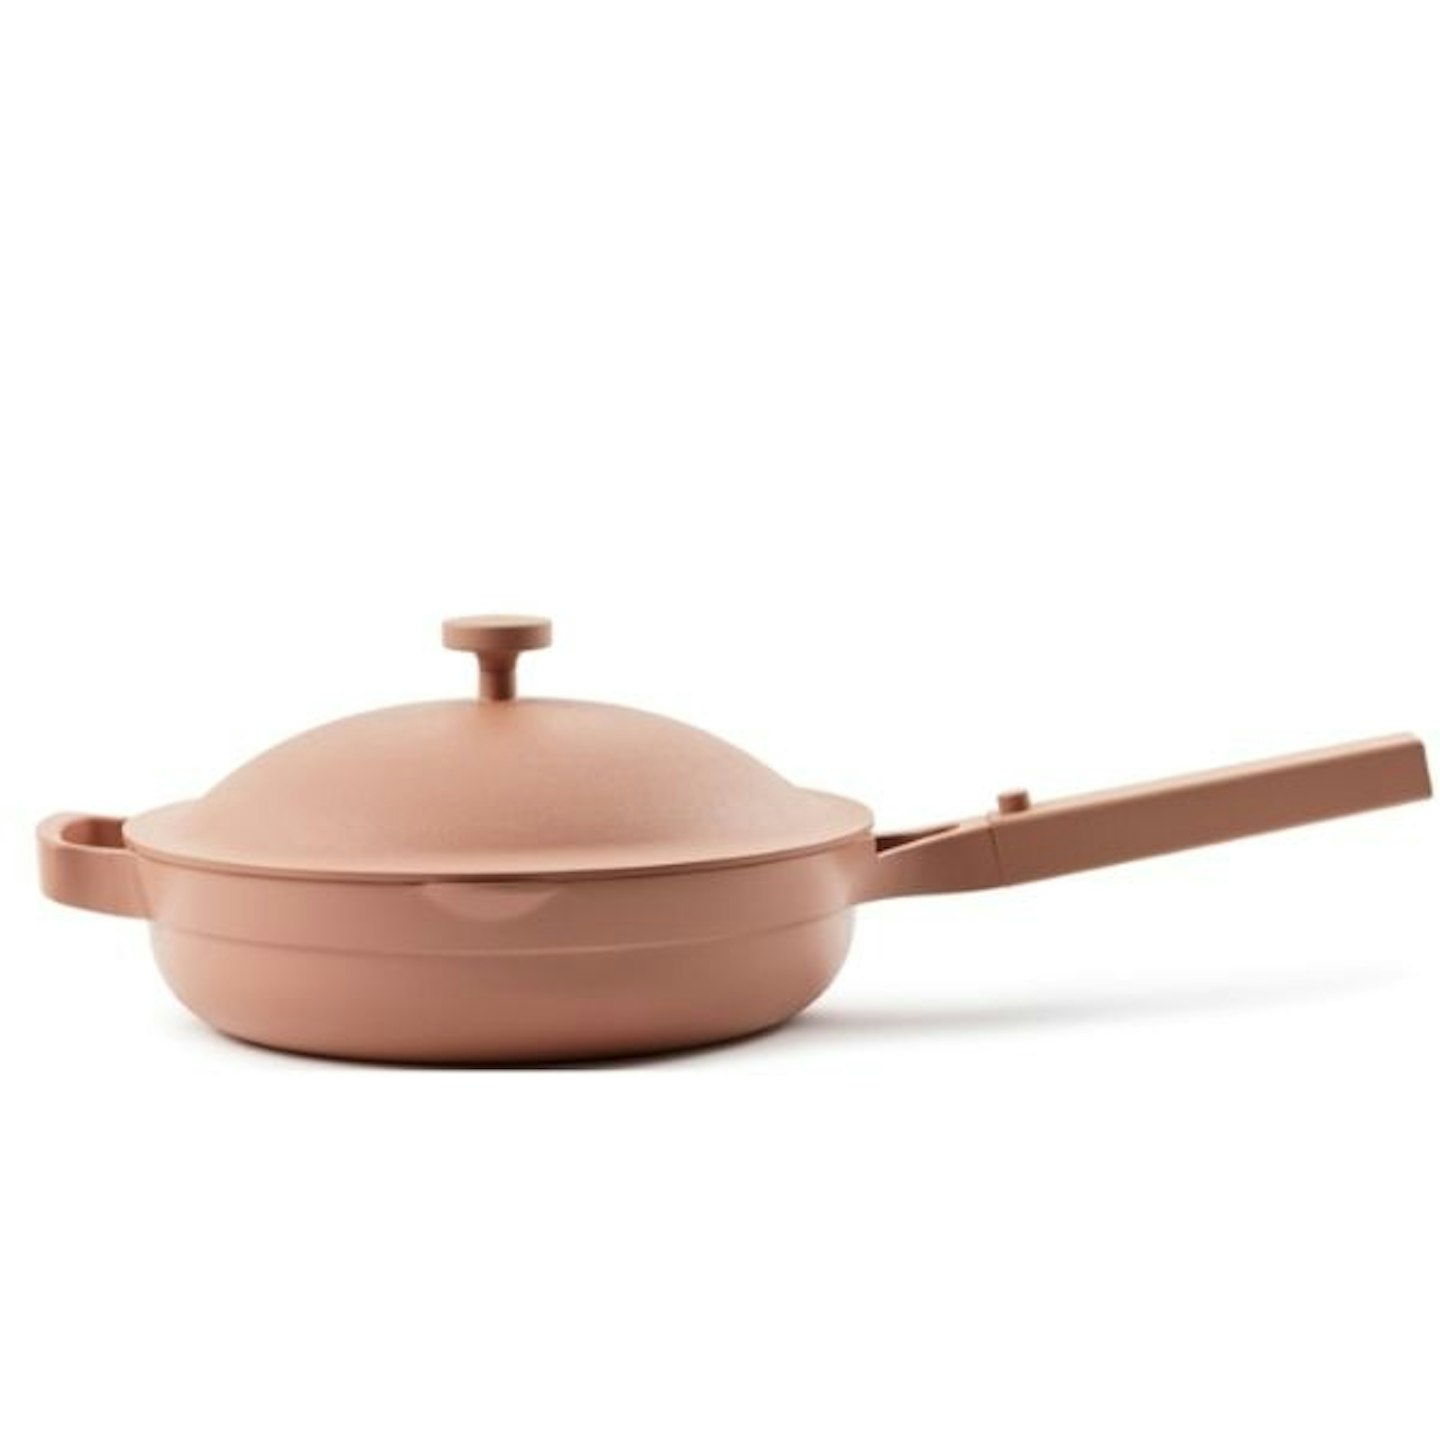 Ceramic pink pan